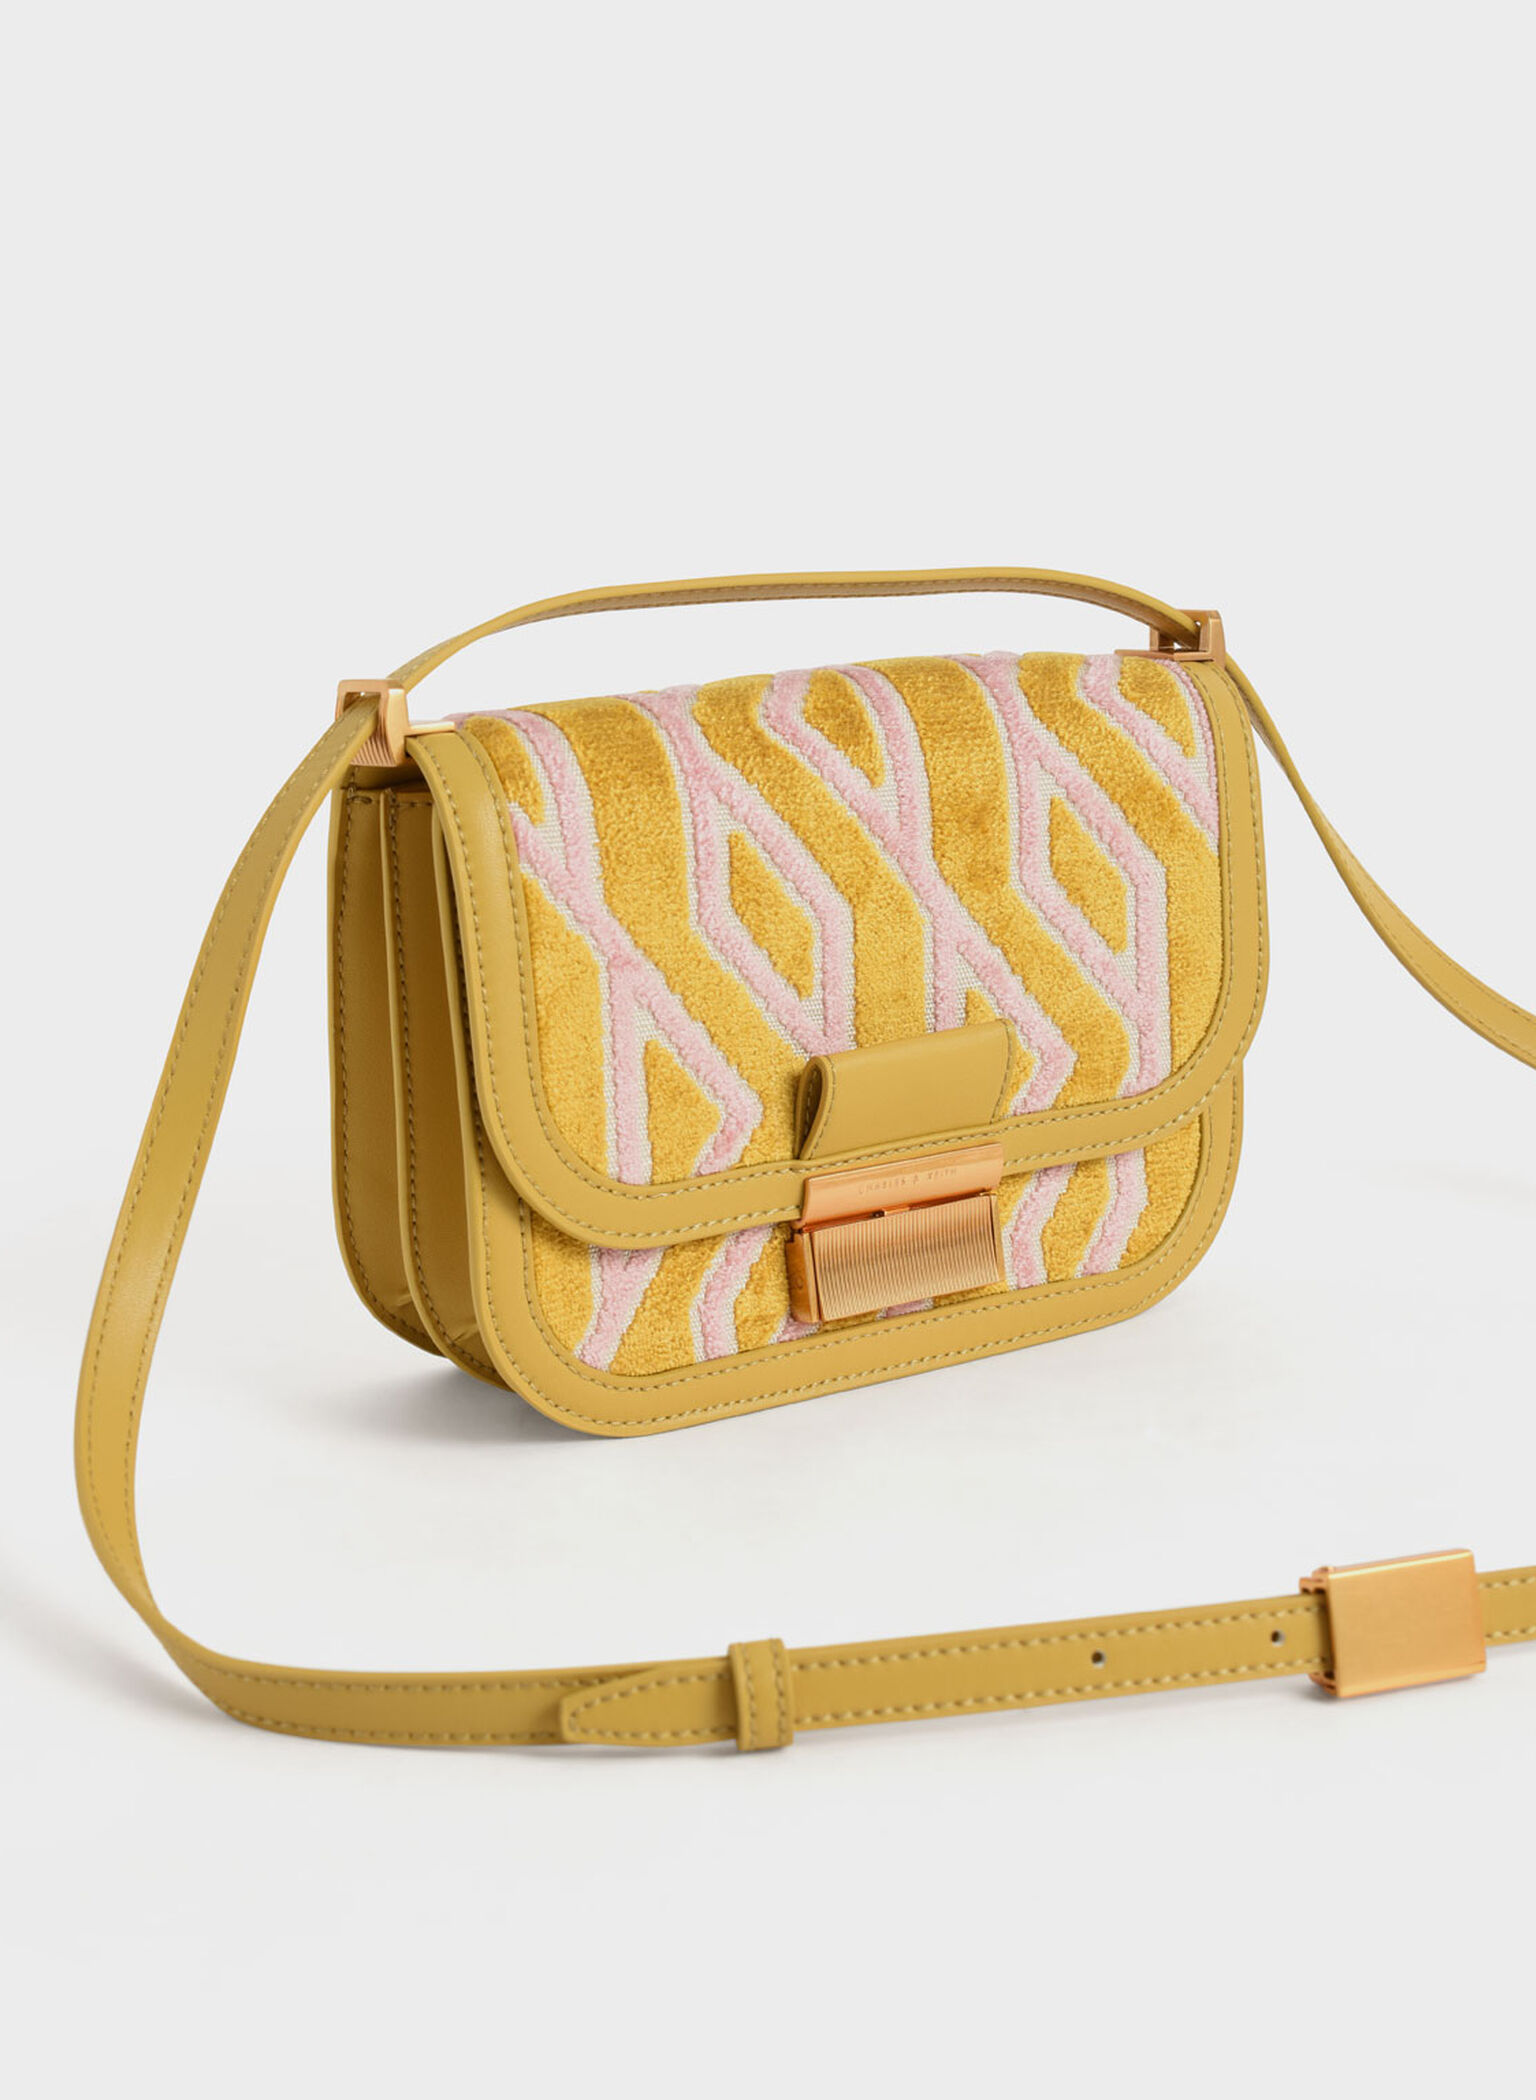 Charlot Jacquard Printed Bag, Mustard, hi-res